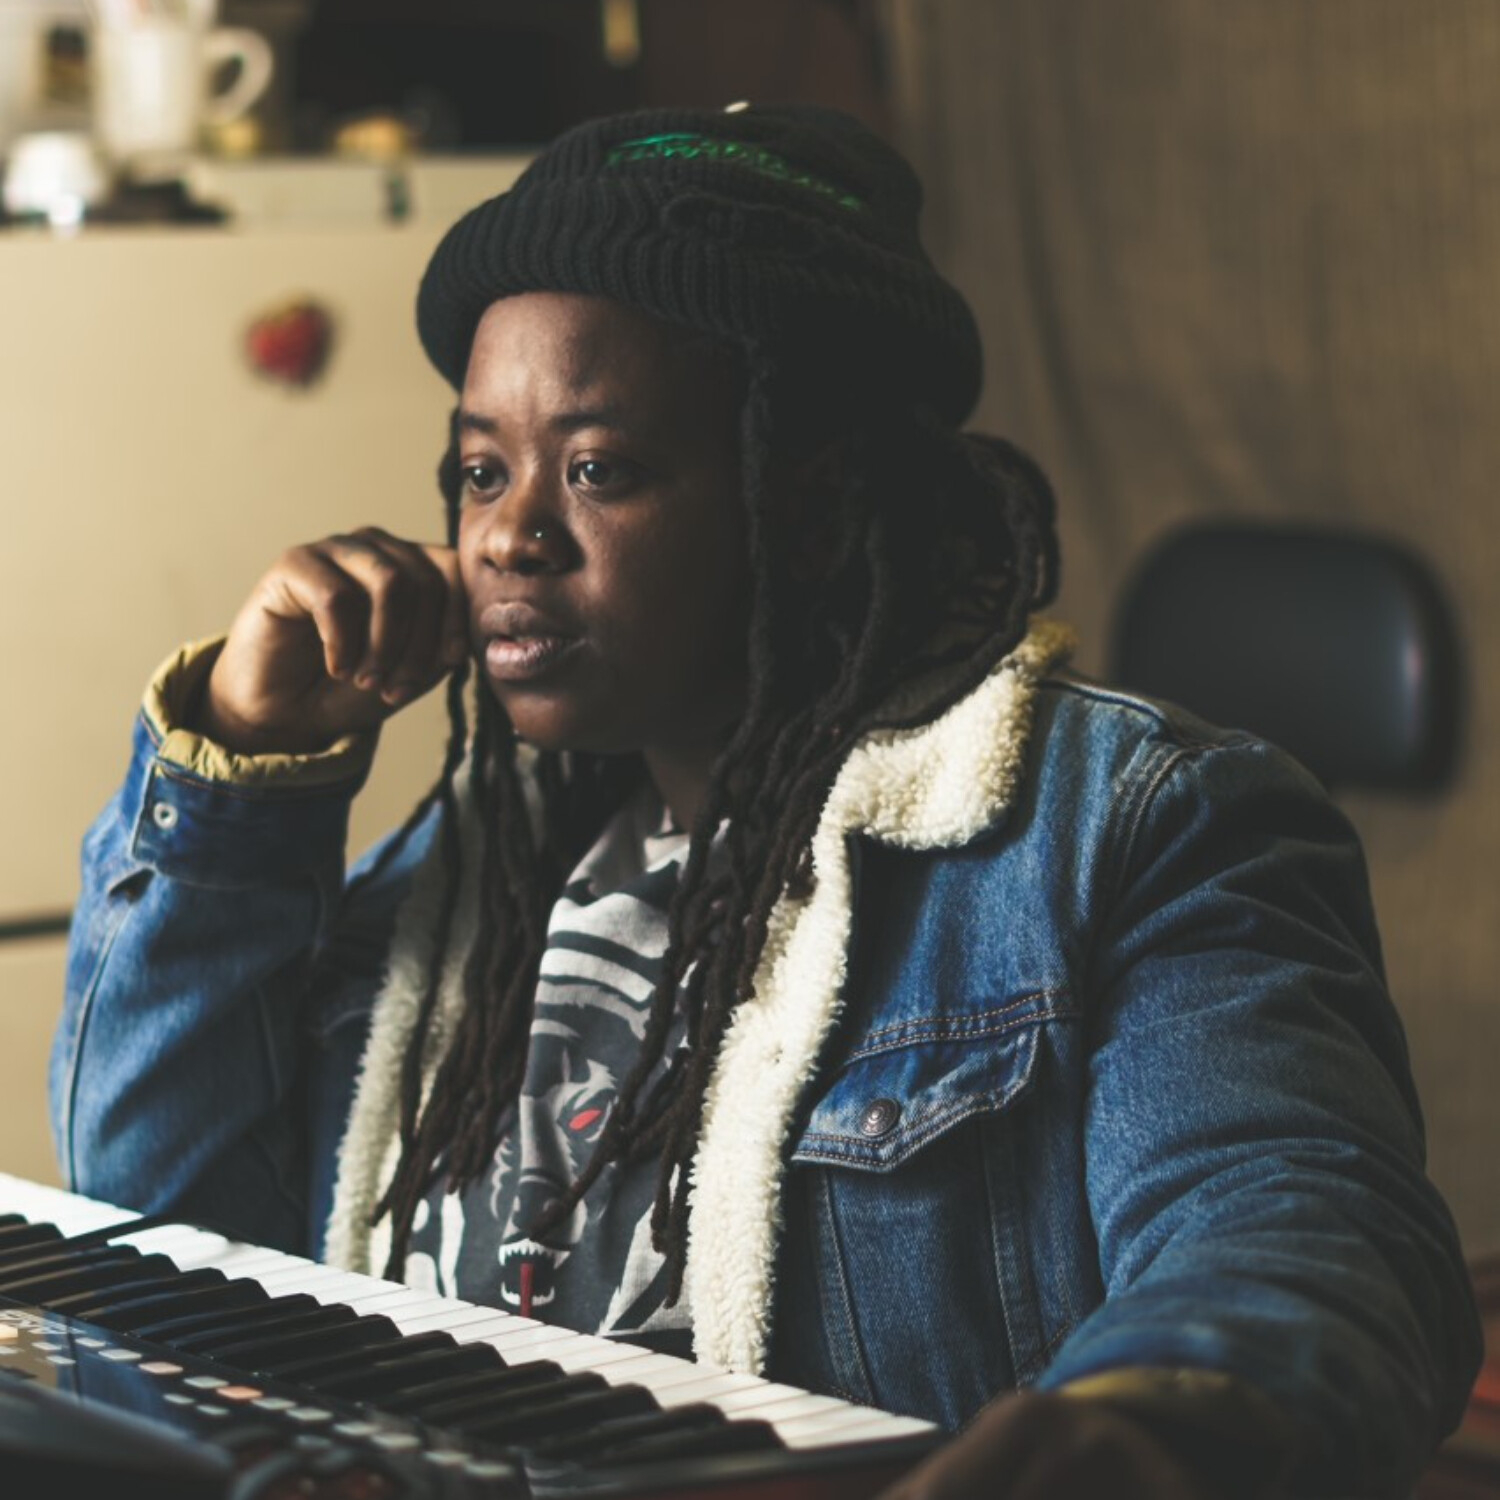 Beats are transformed into hip-hop inspiration by Bleu Wavs